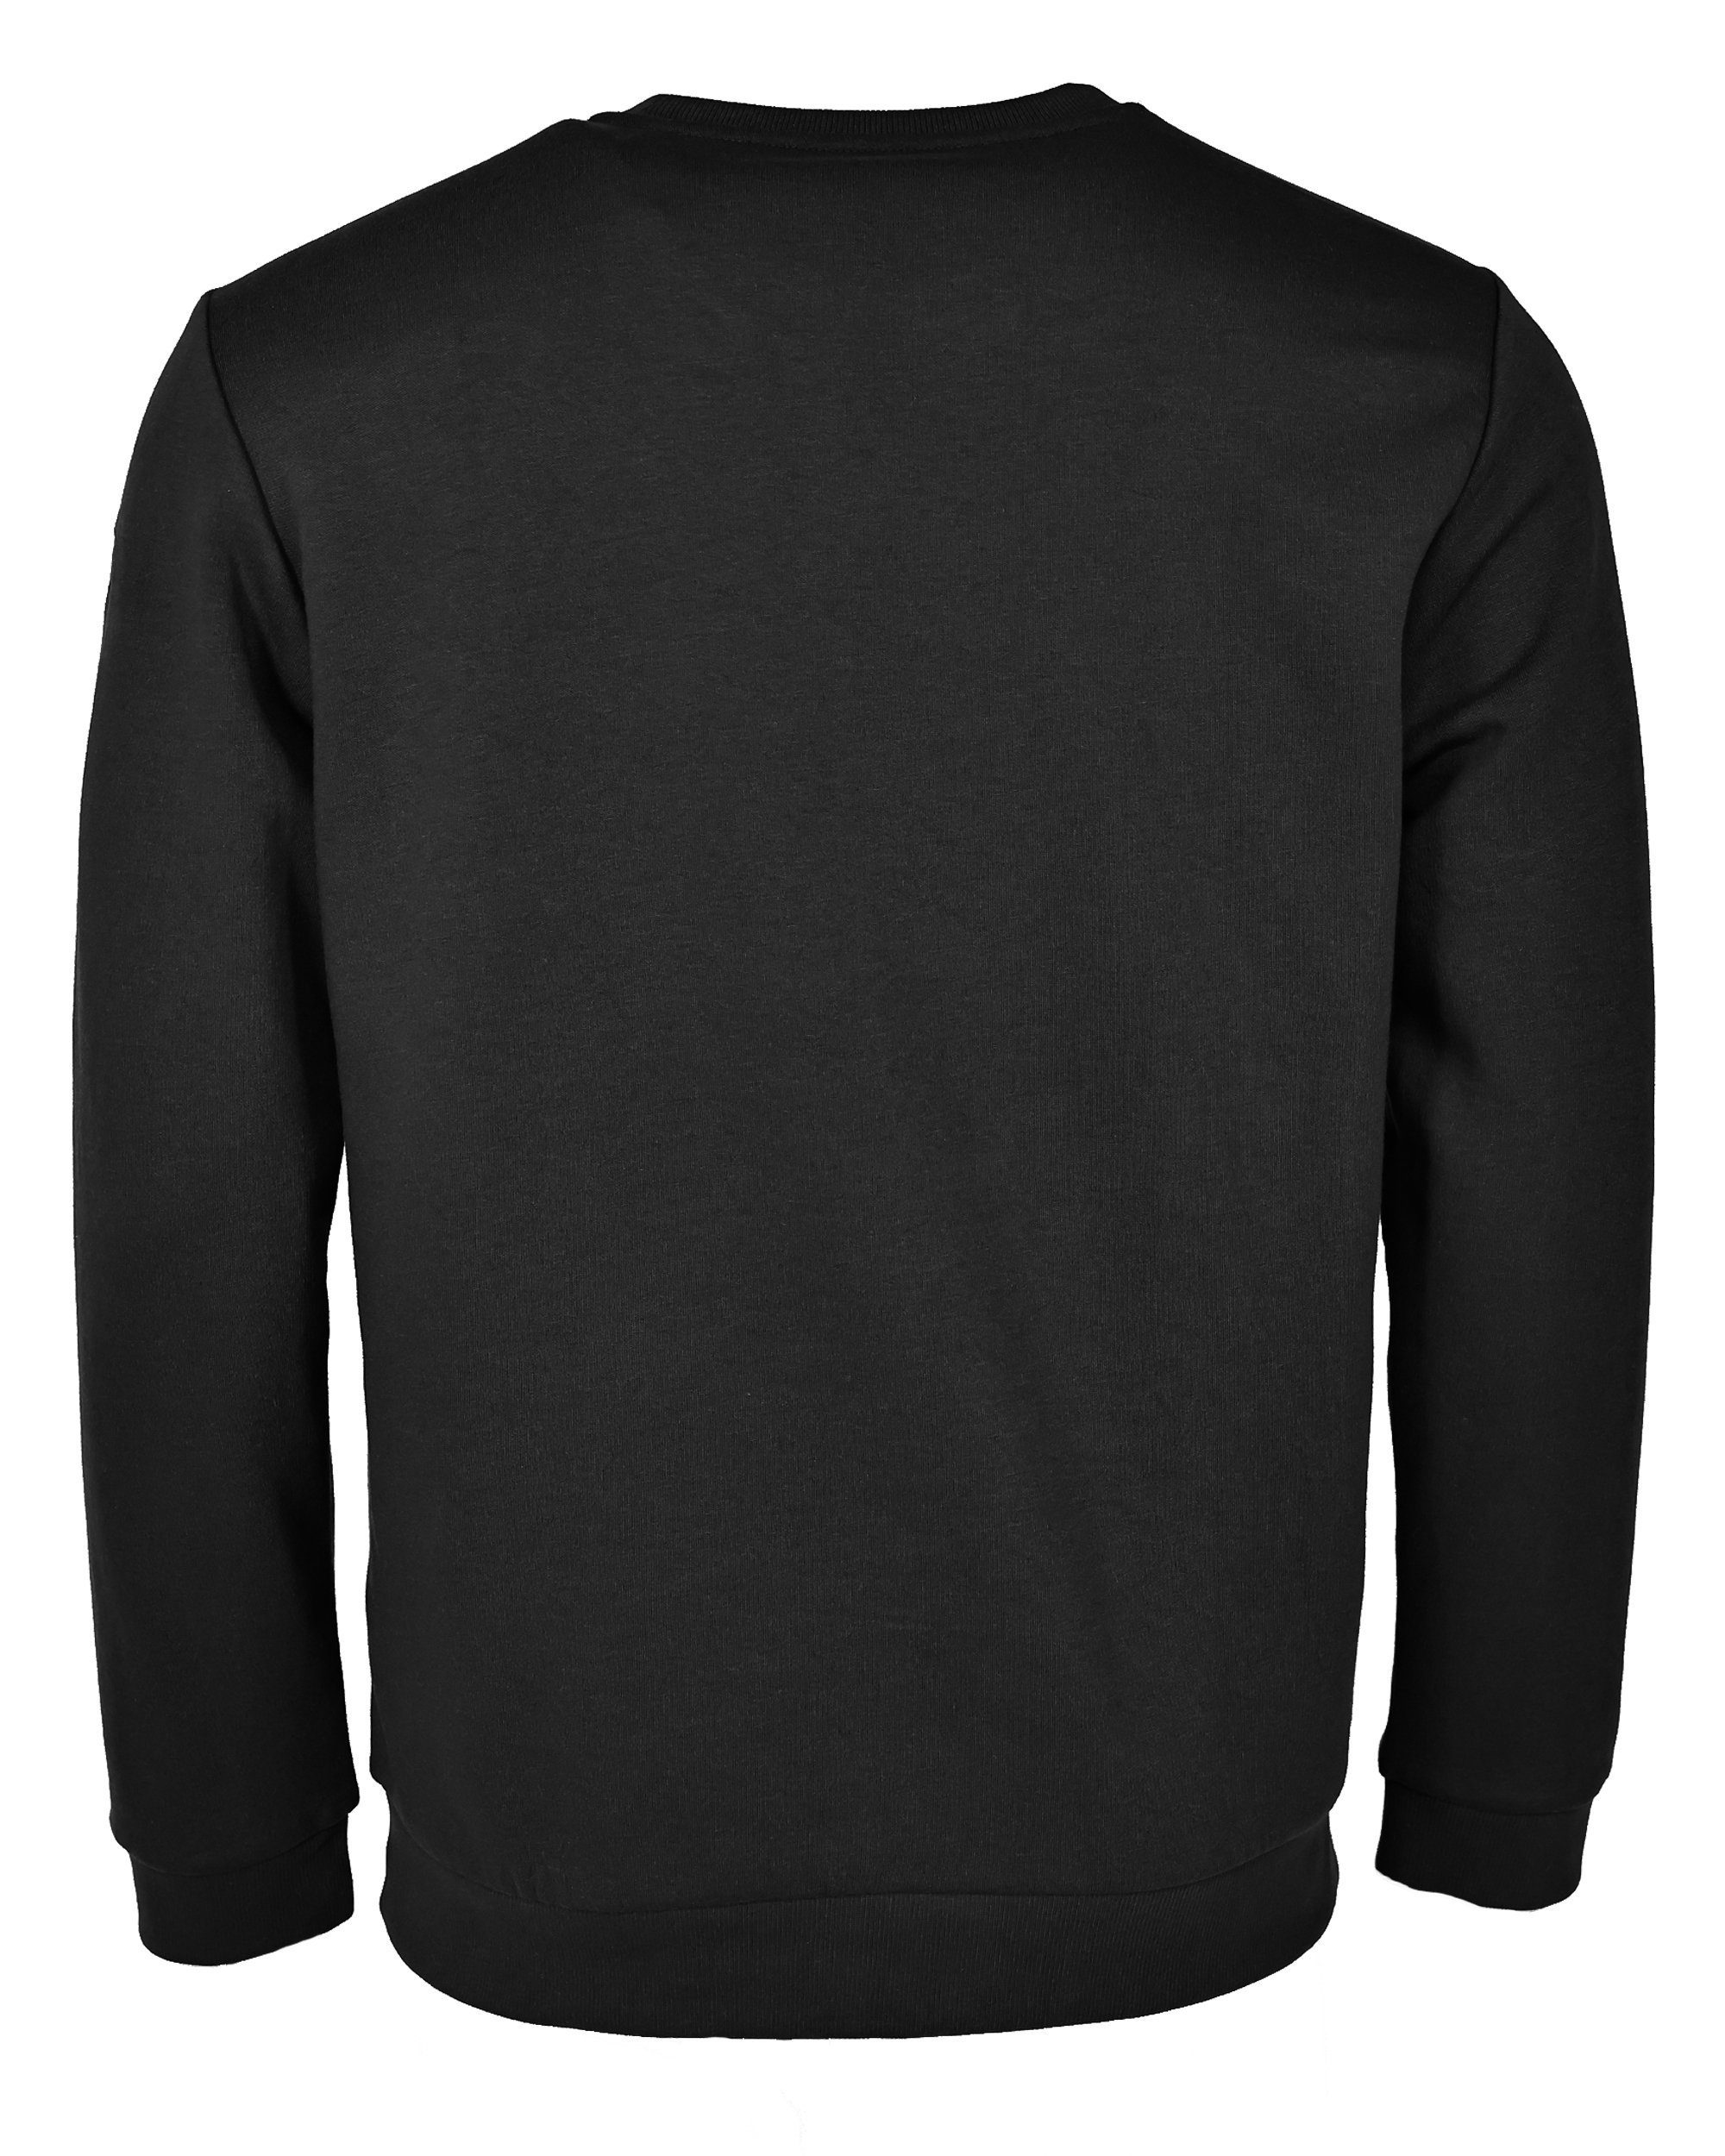 JCC Sweatshirt 310212052 black